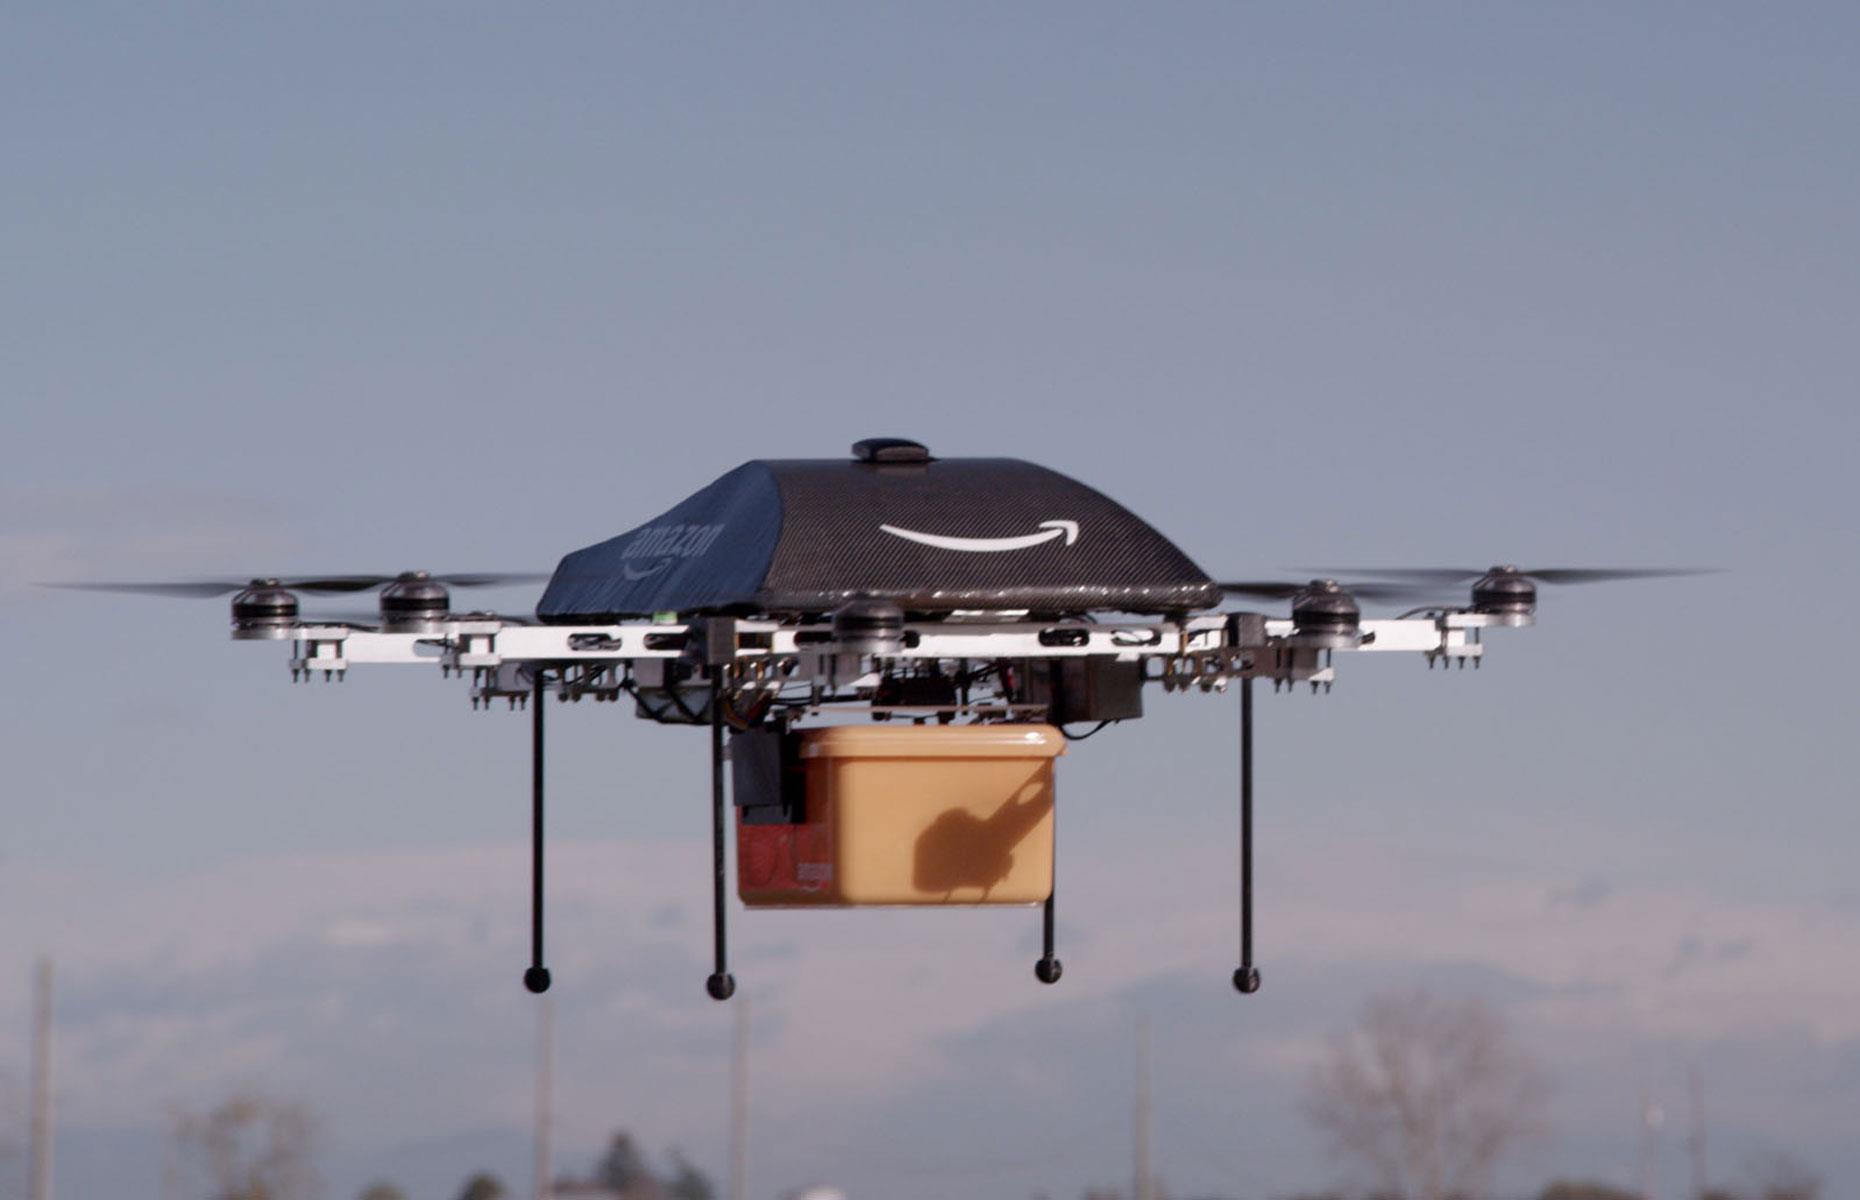 9. Fleets of delivery drones 